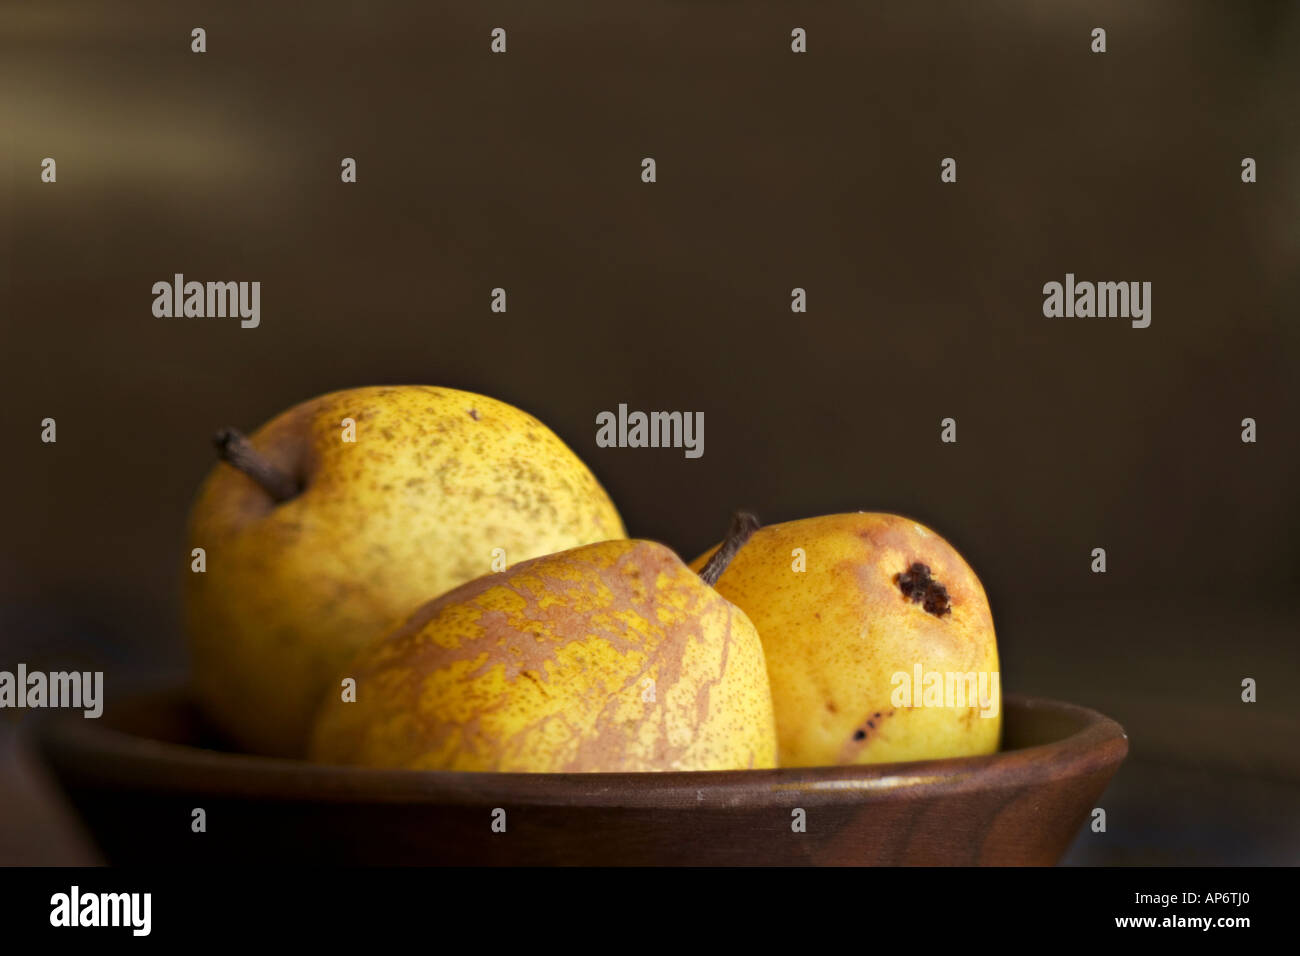 three pears on dark background Stock Photo